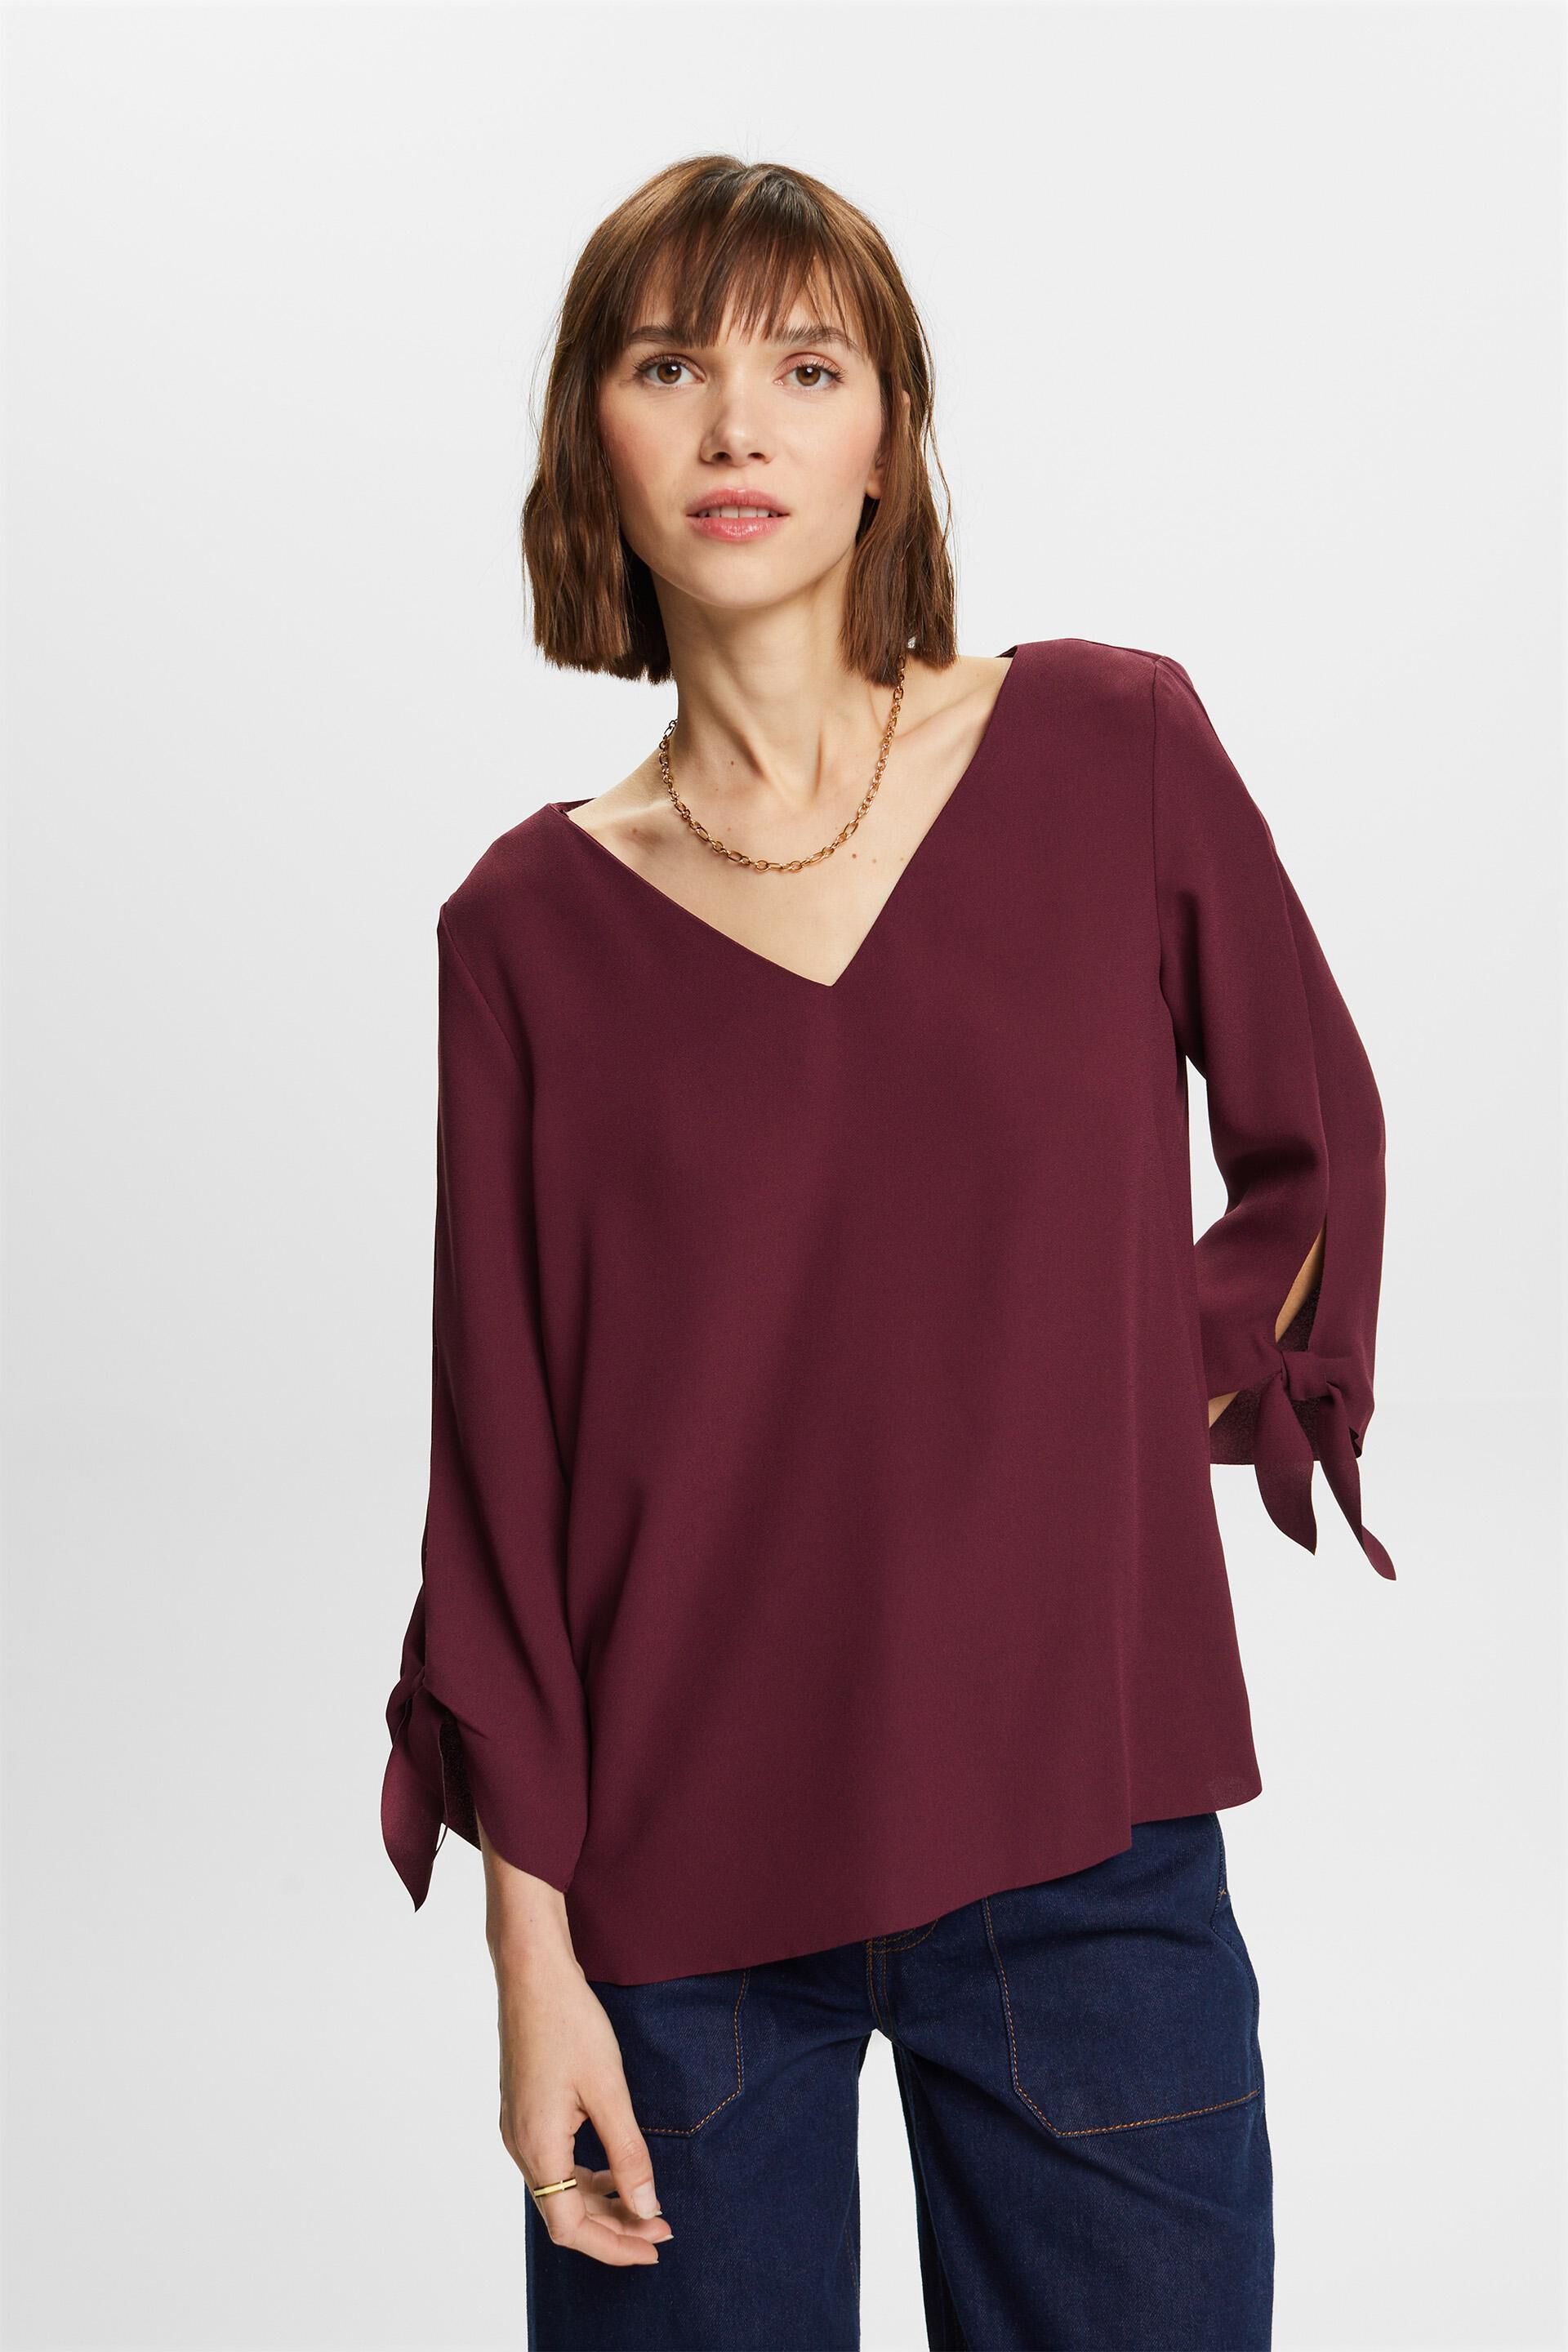 Esprit Stretch blouse with open edges